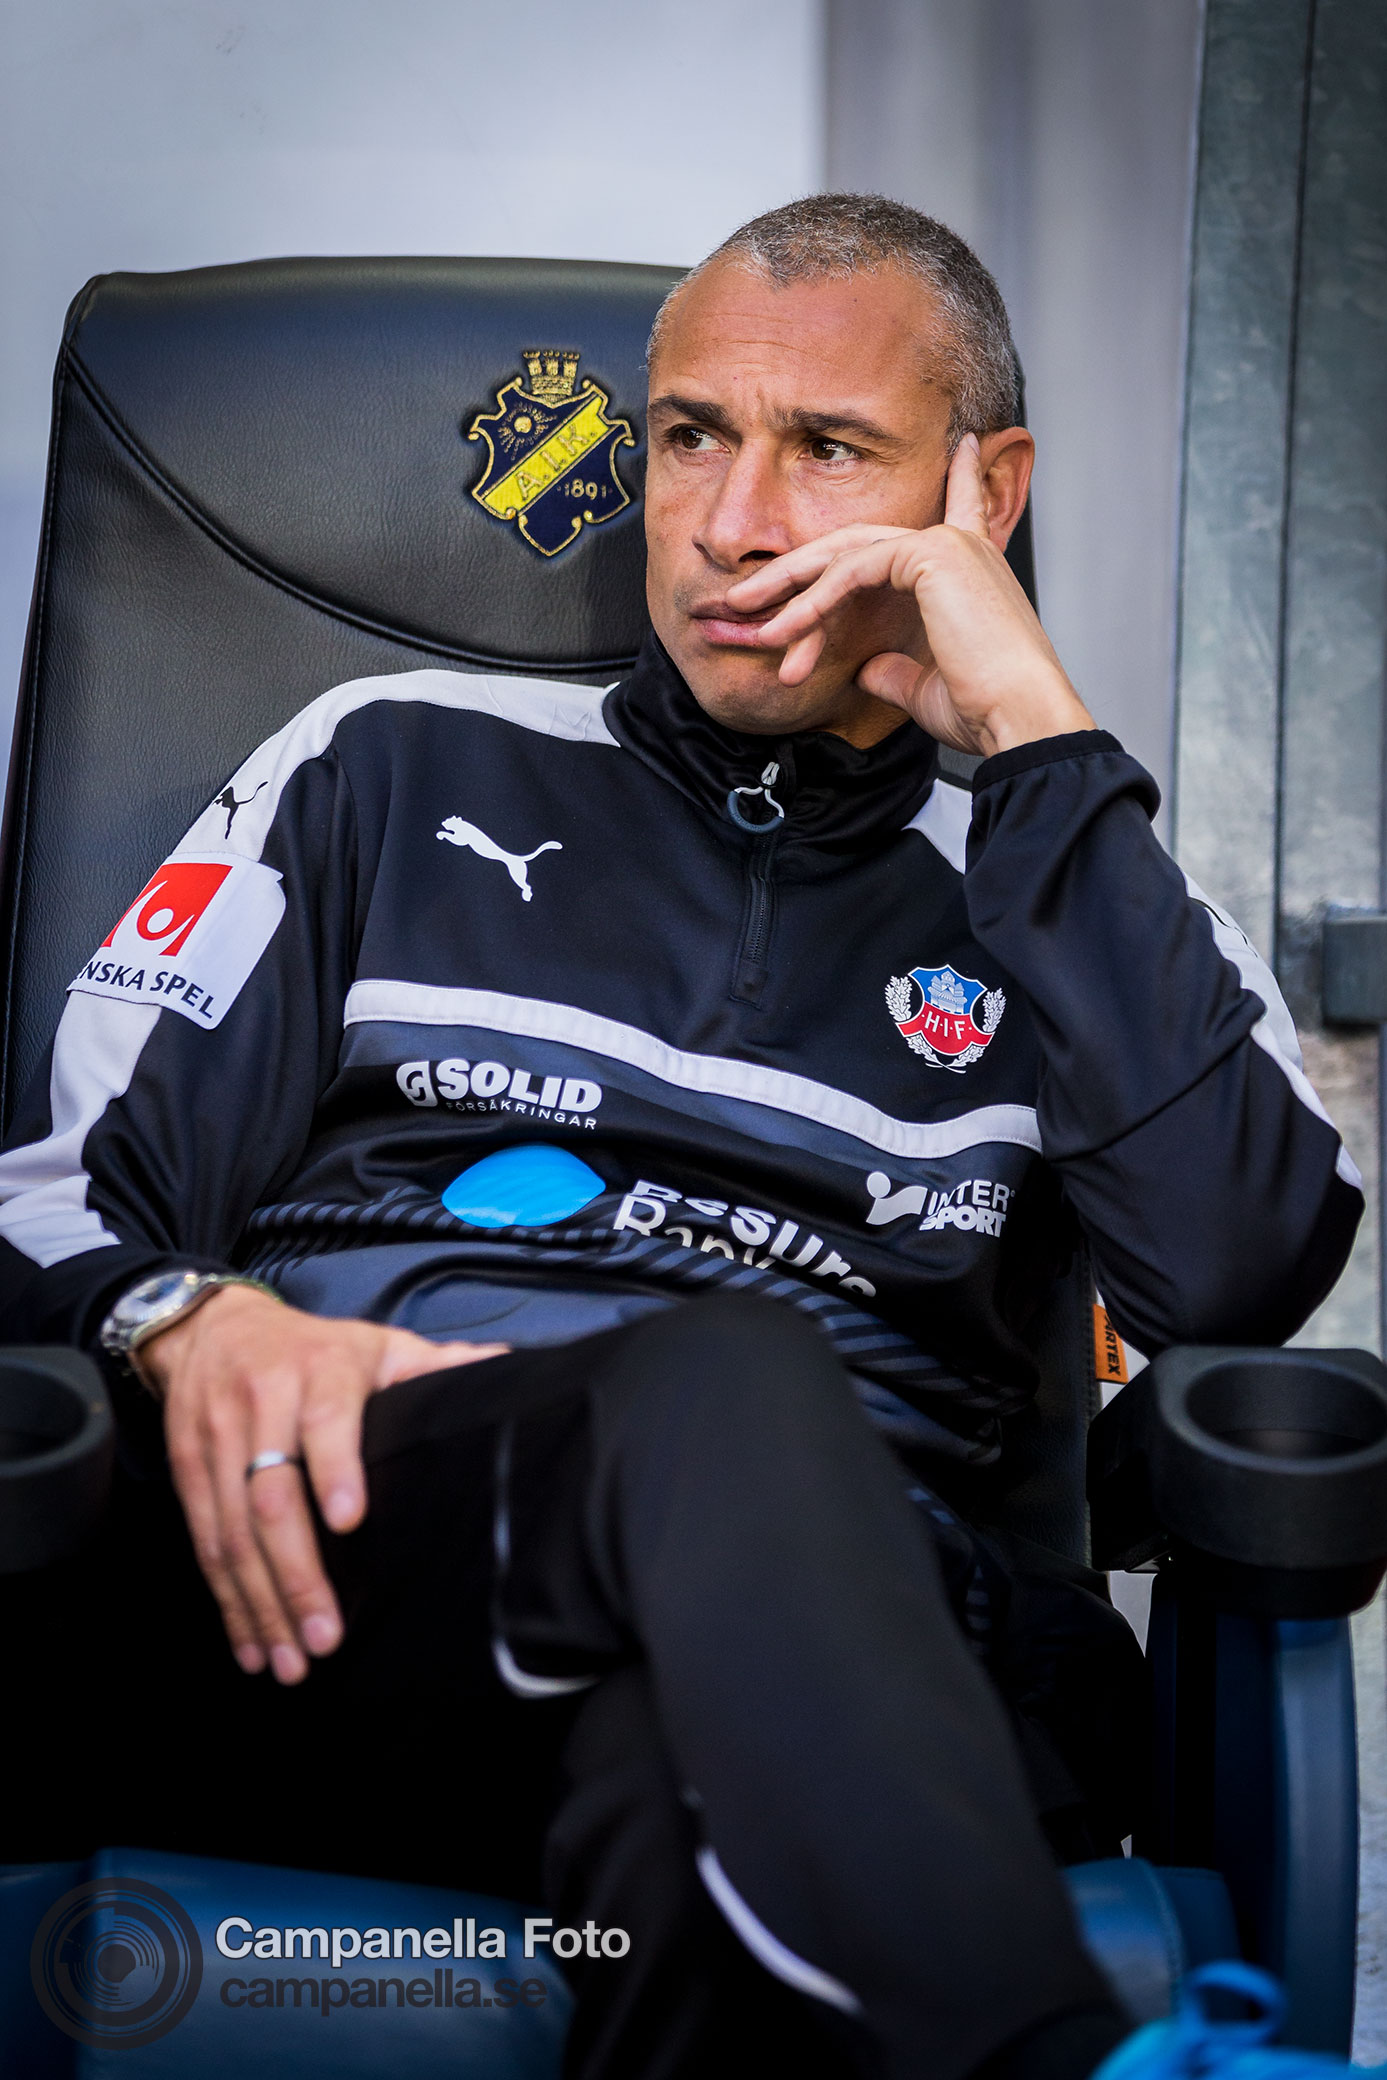 AIK comeback to win against Helsingborg - Michael Campanella Photography